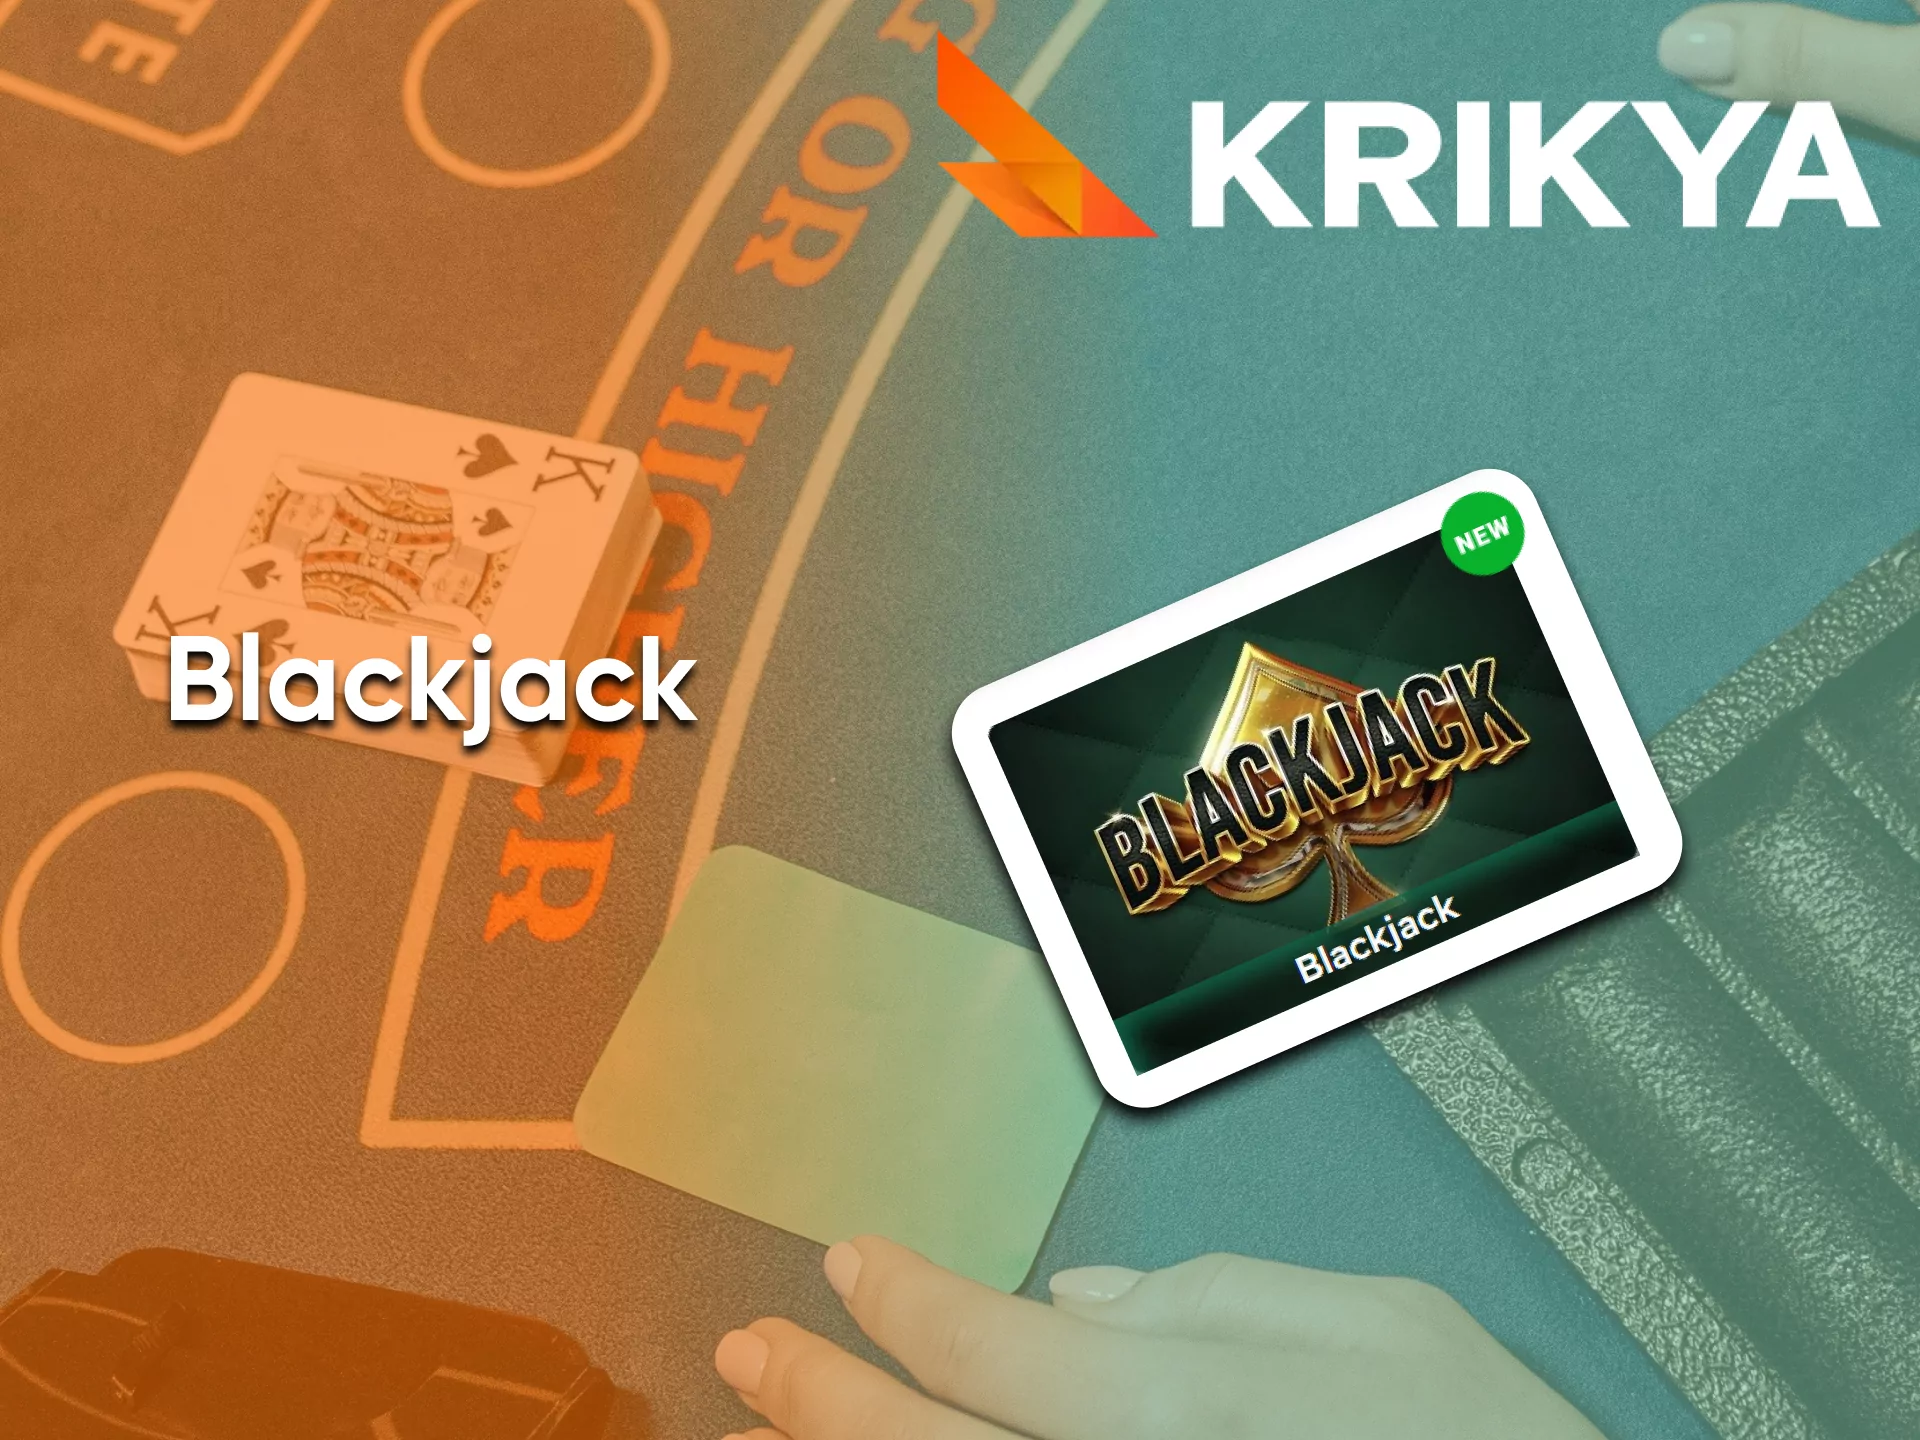 Fans of card games can play Blackjack by Krikya.